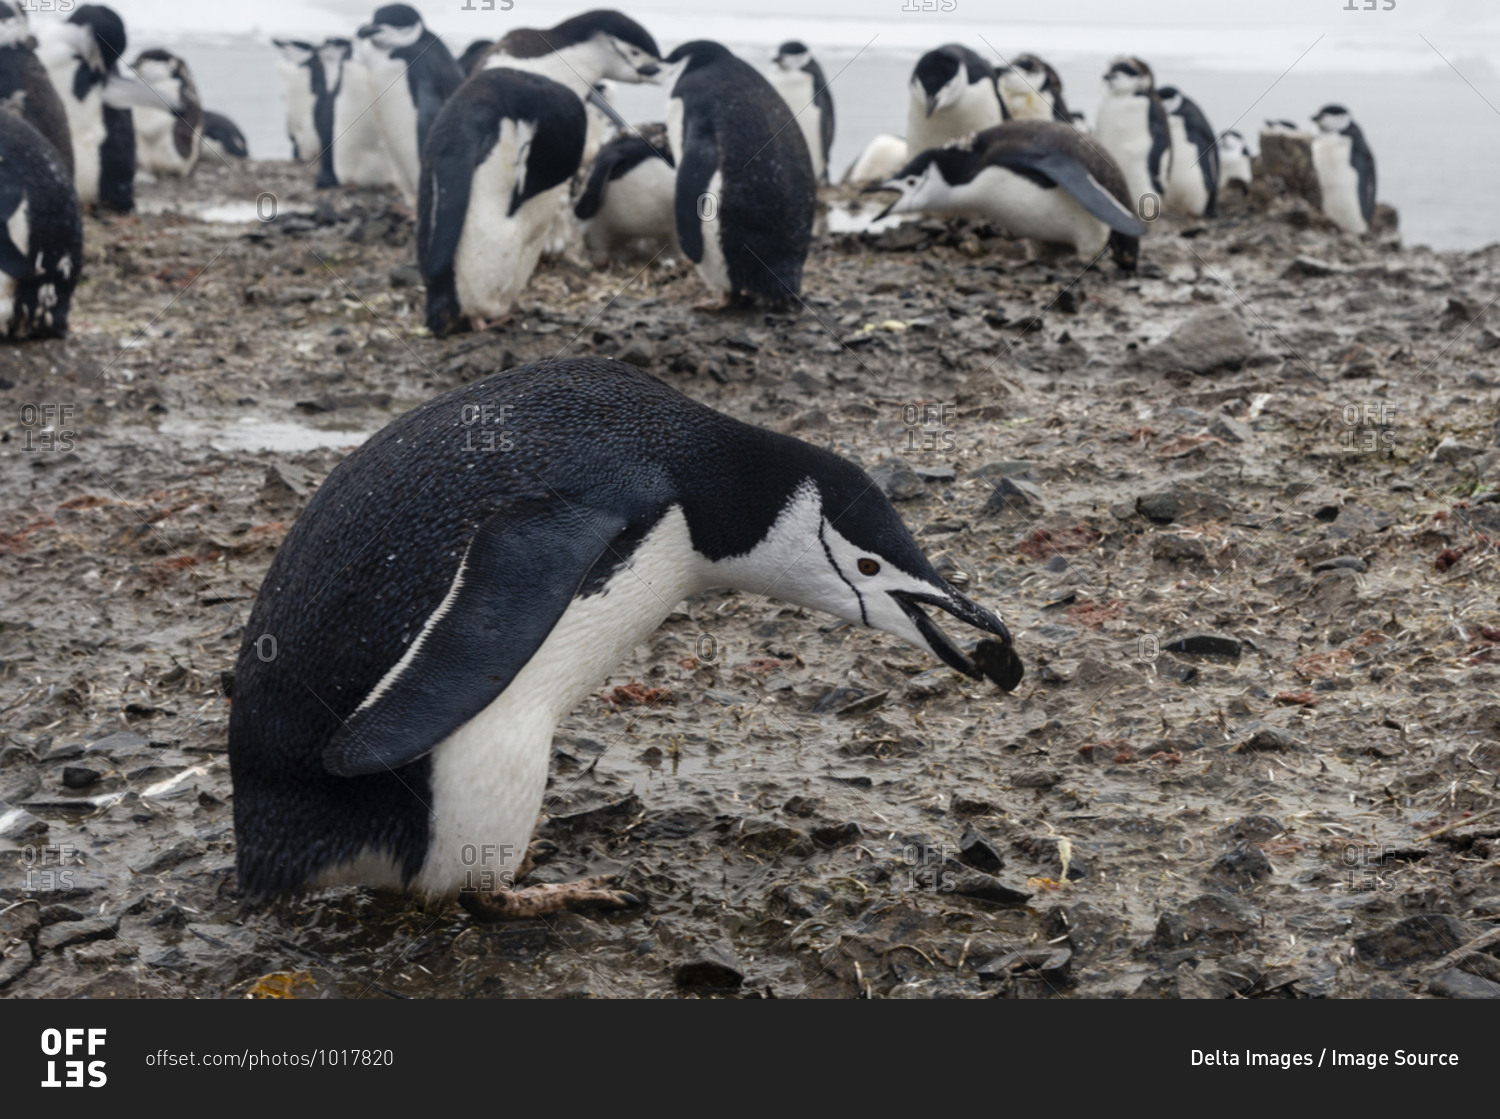 Gentoo penguin (Pygoscelis papua) carrying nesting stone in its beak, Half Moon Island, Antarctica